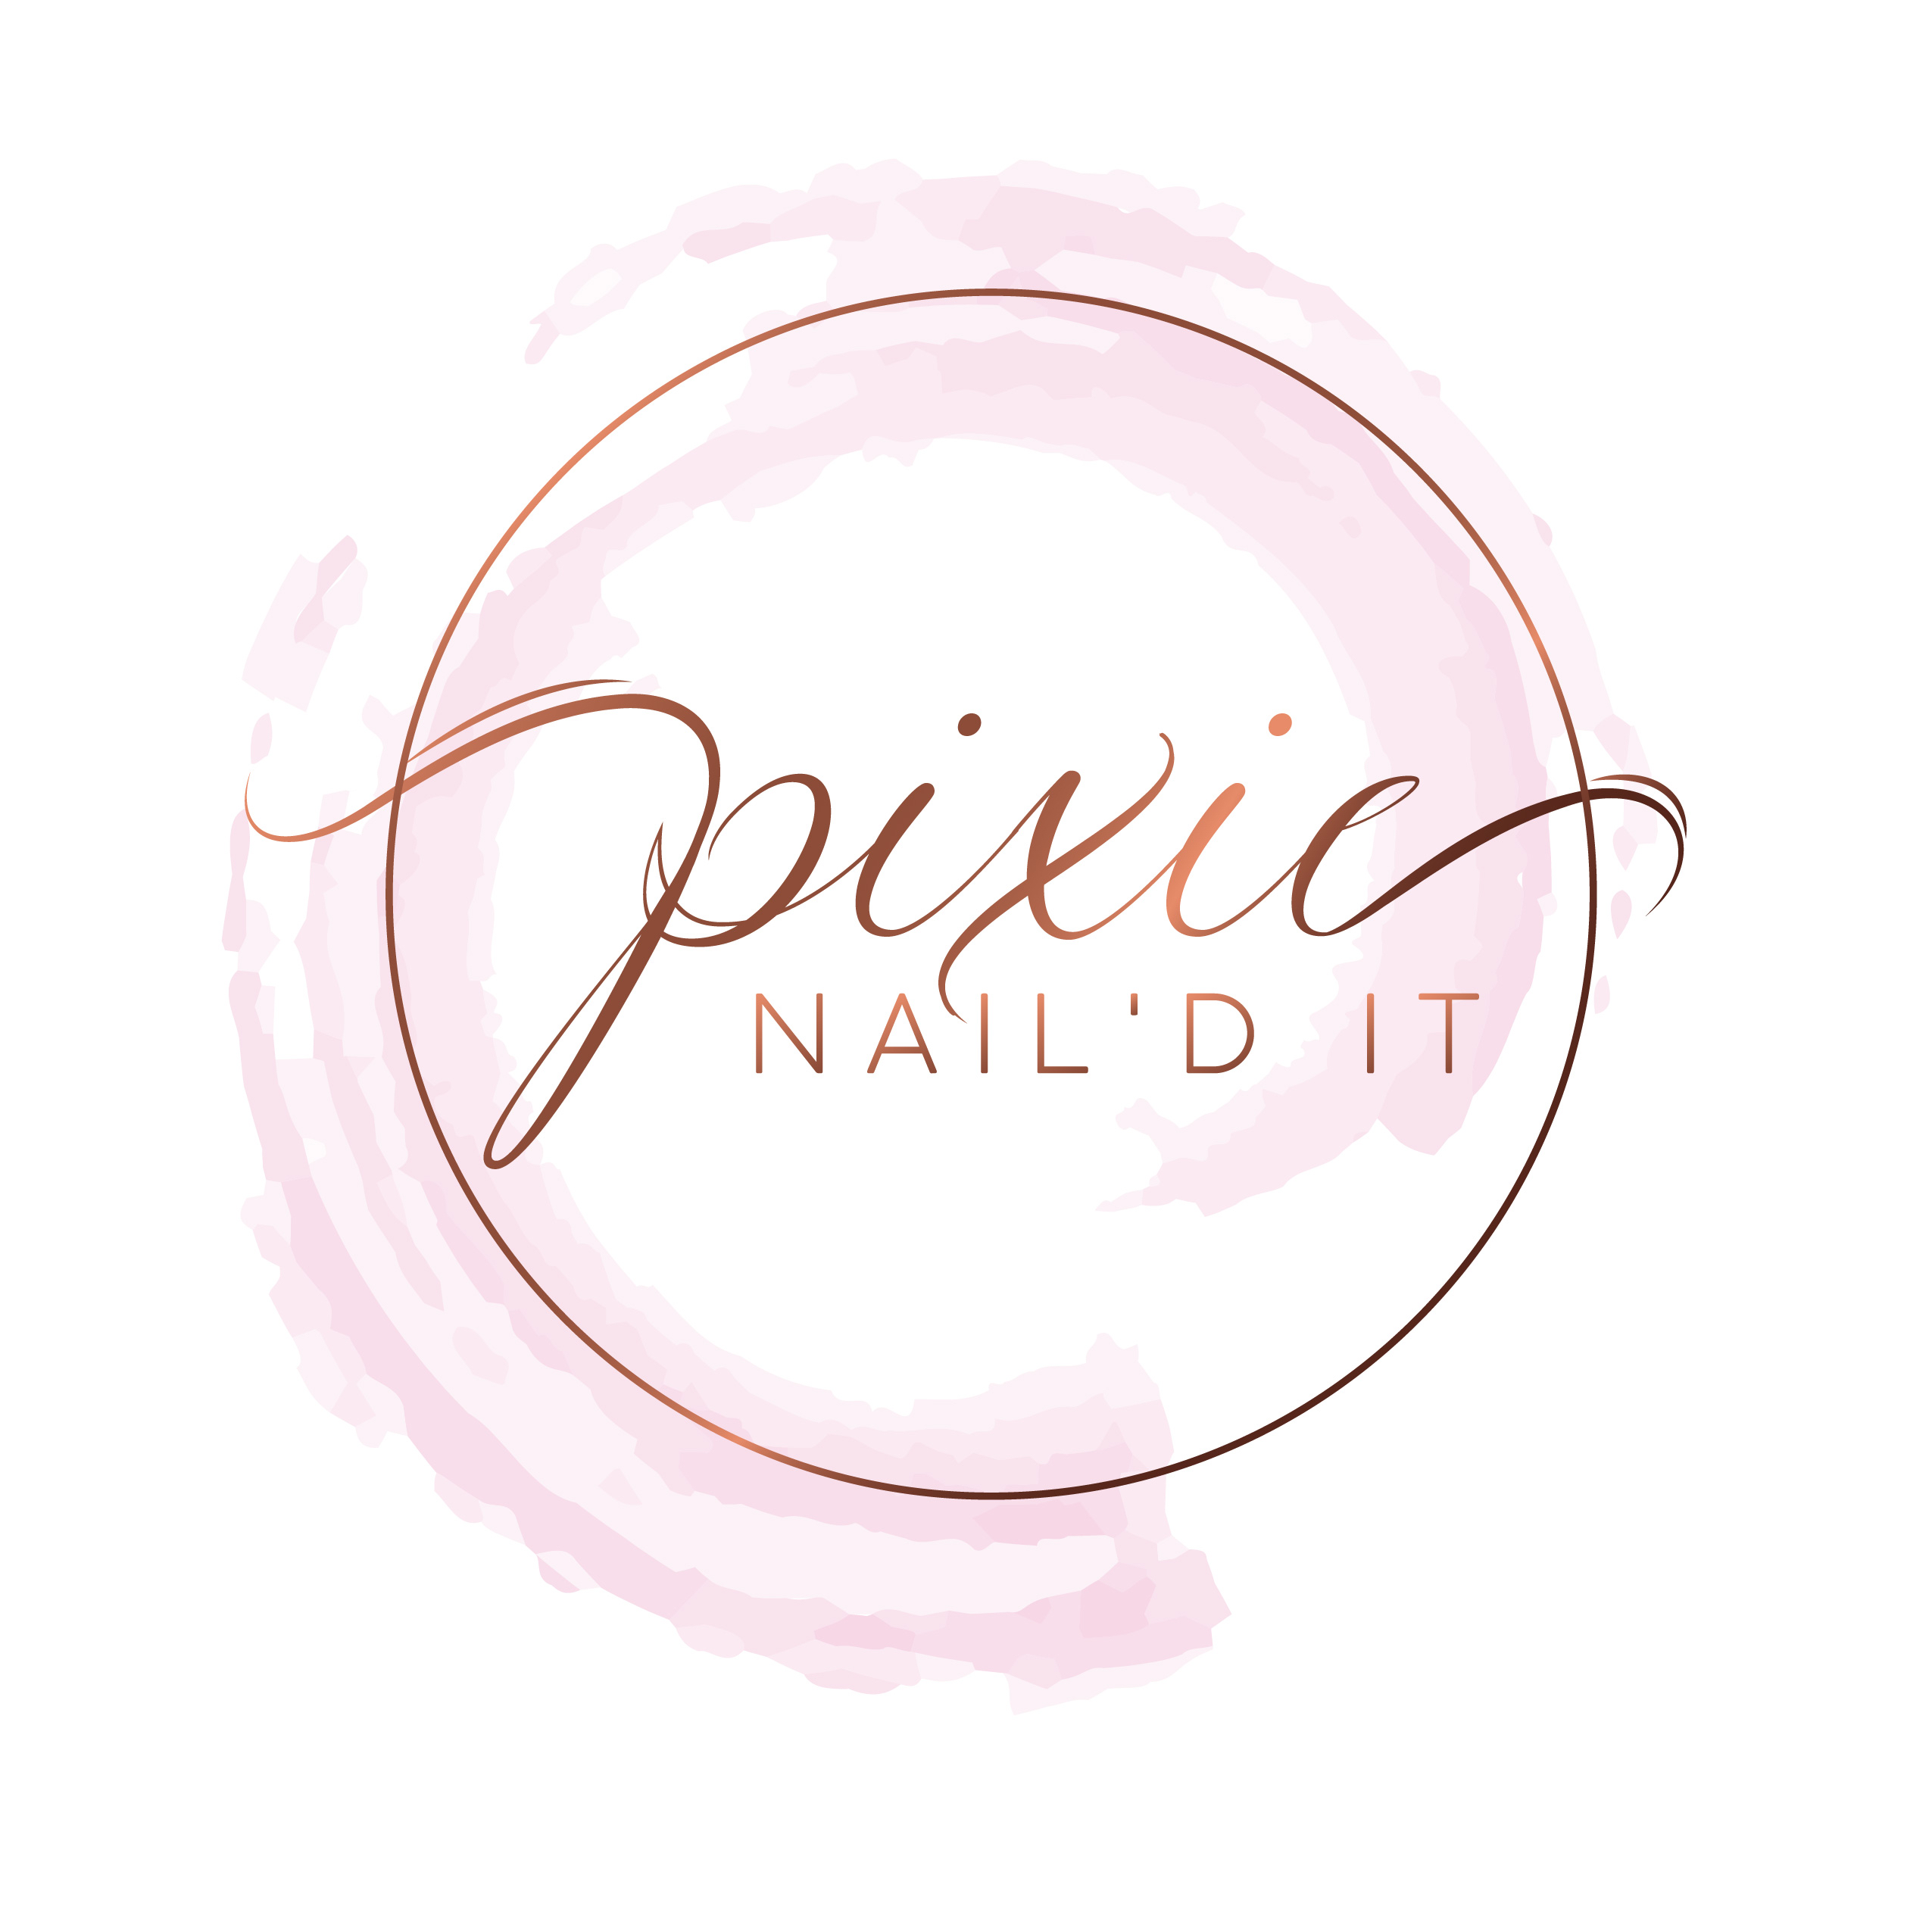 Pixie Nail'd It-logo.jpg